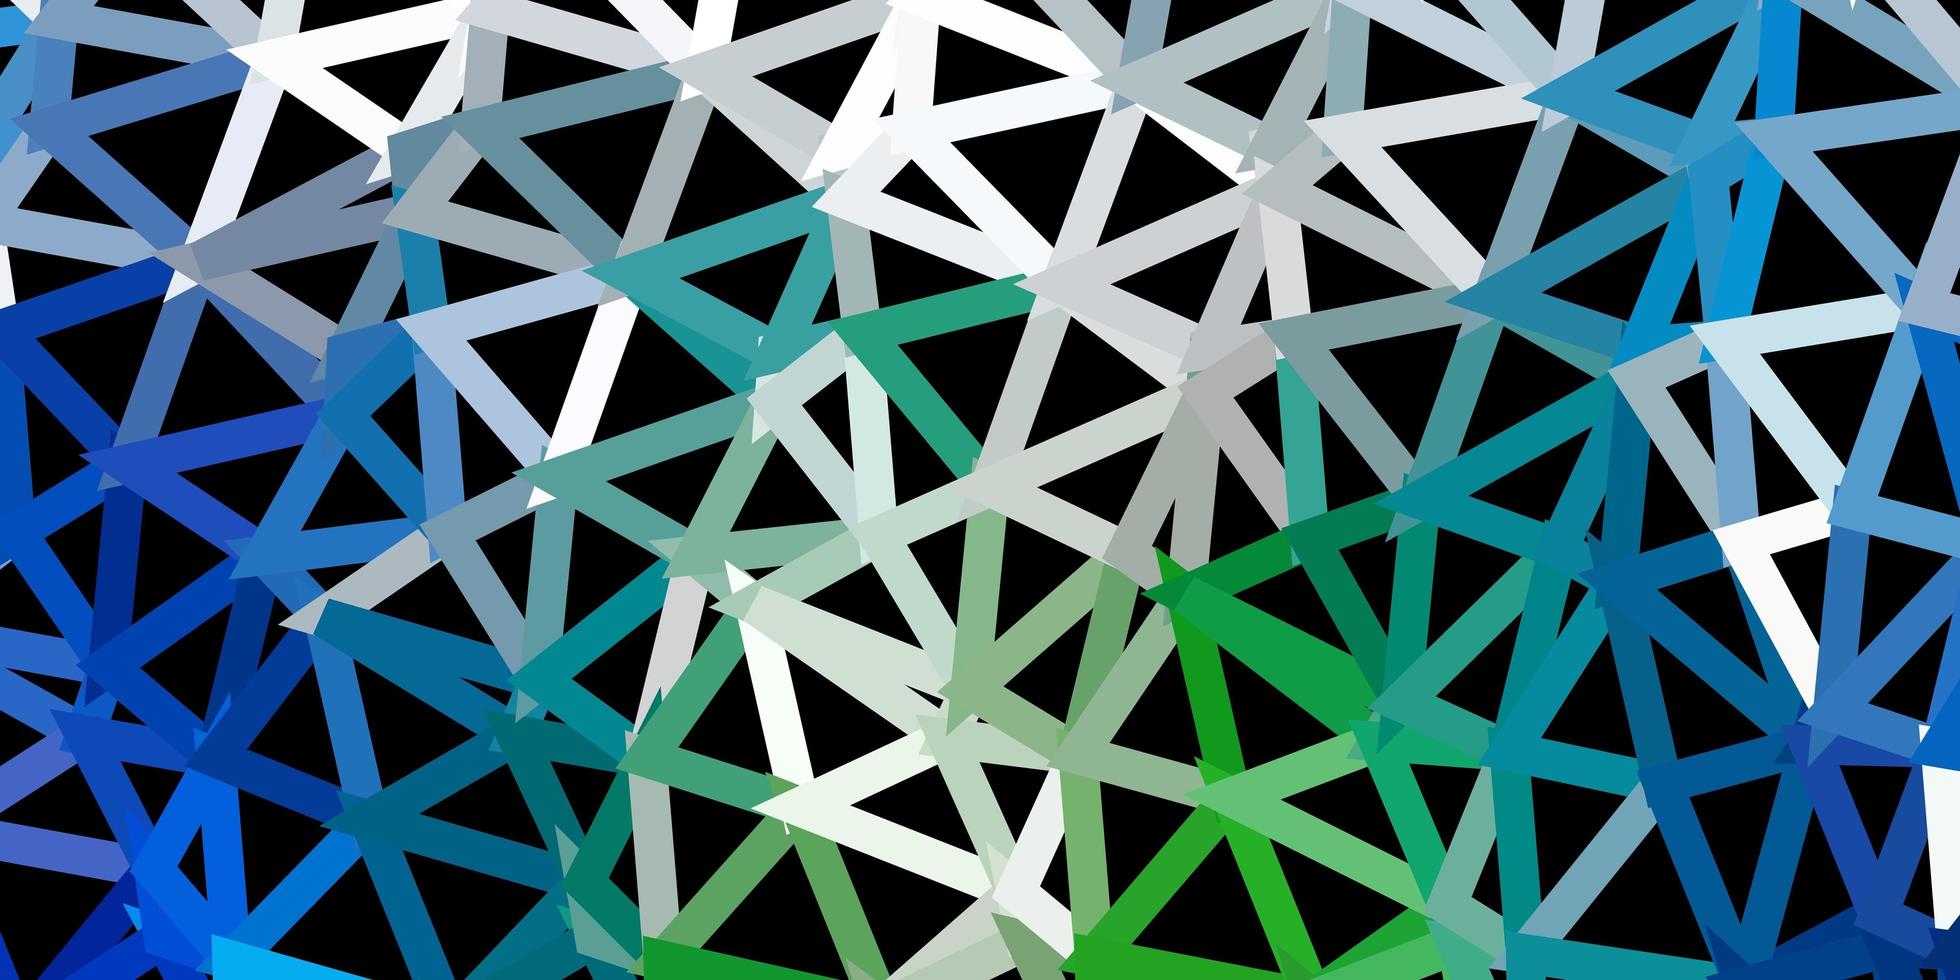 dunkelblaue, grüne Vektor abstrakte Dreiecksschablone.